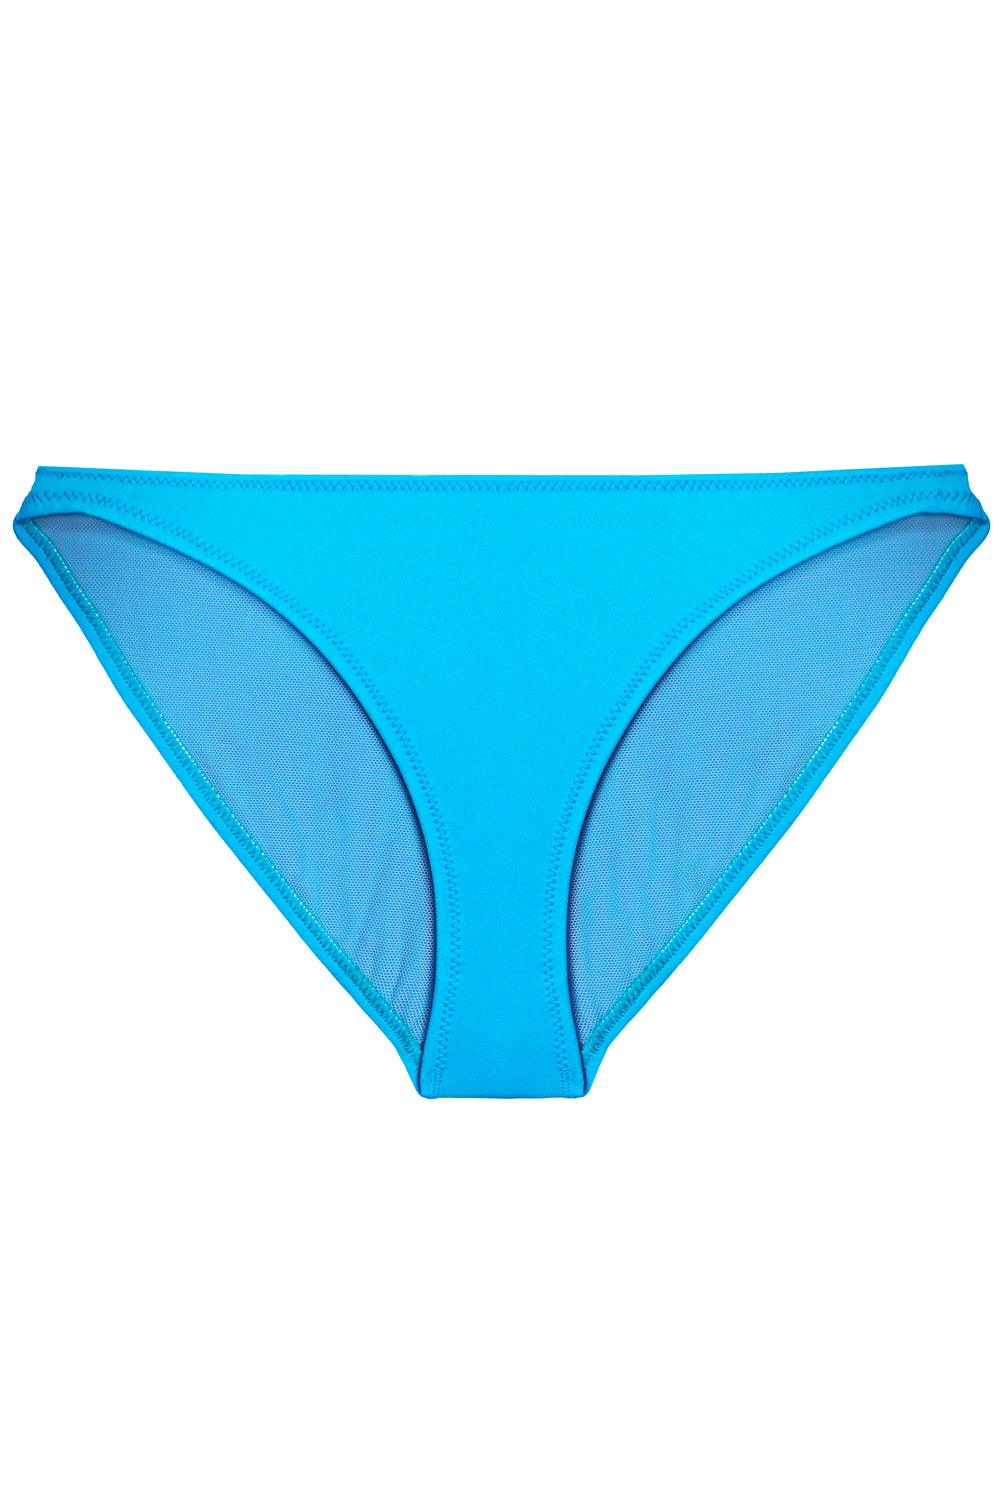 Tonic Blue bikini bottom - yesUndress